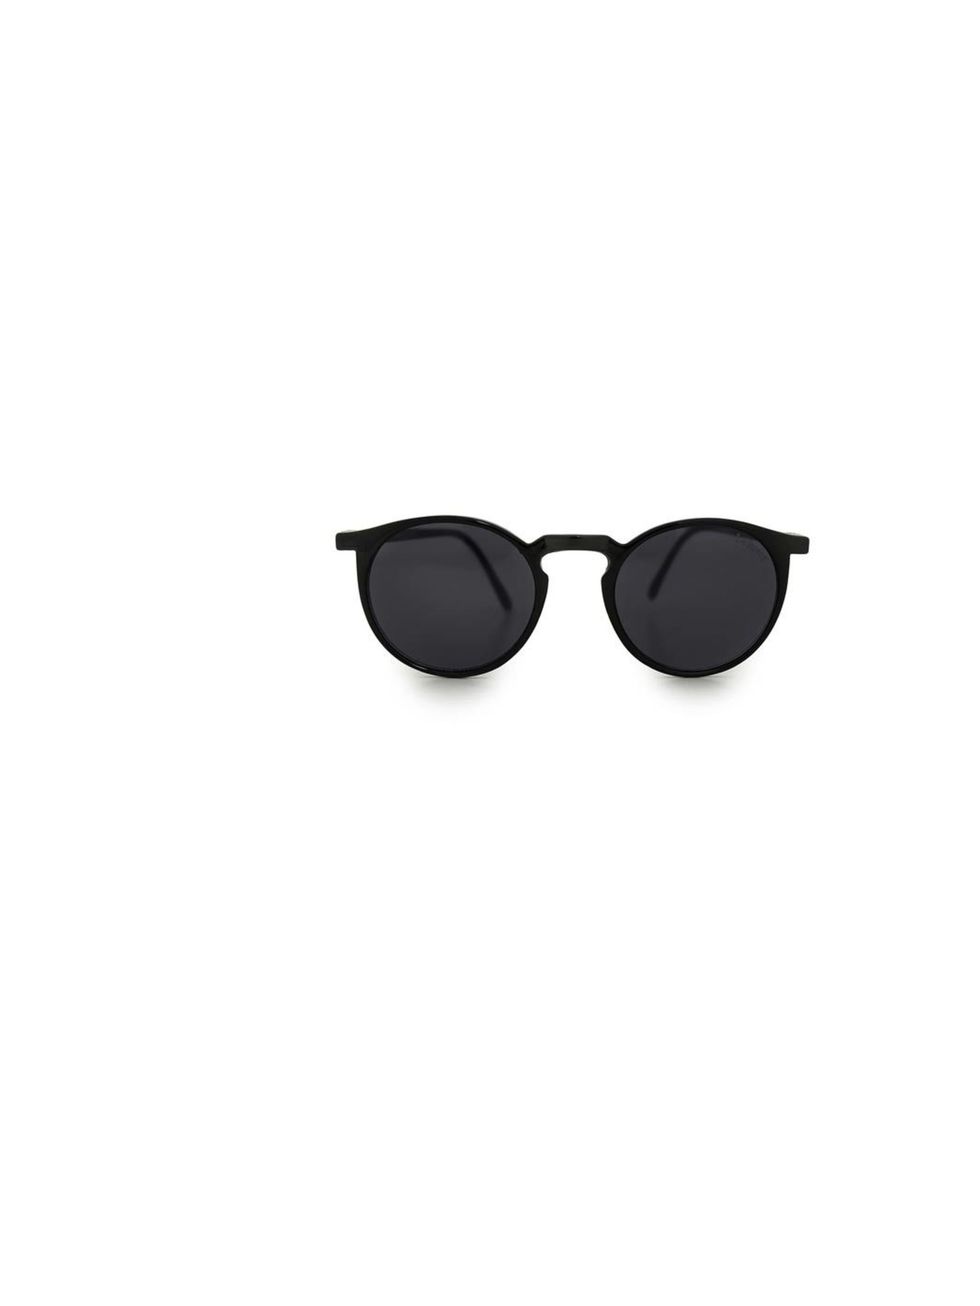 <p>Le Specs sunglasses, £39.95, at <a href="http://nelly.com/uk/womens-fashion/accessories/glasses/le-specs-557/teen-spirit-557069-14/">Nelly.com</a></p>